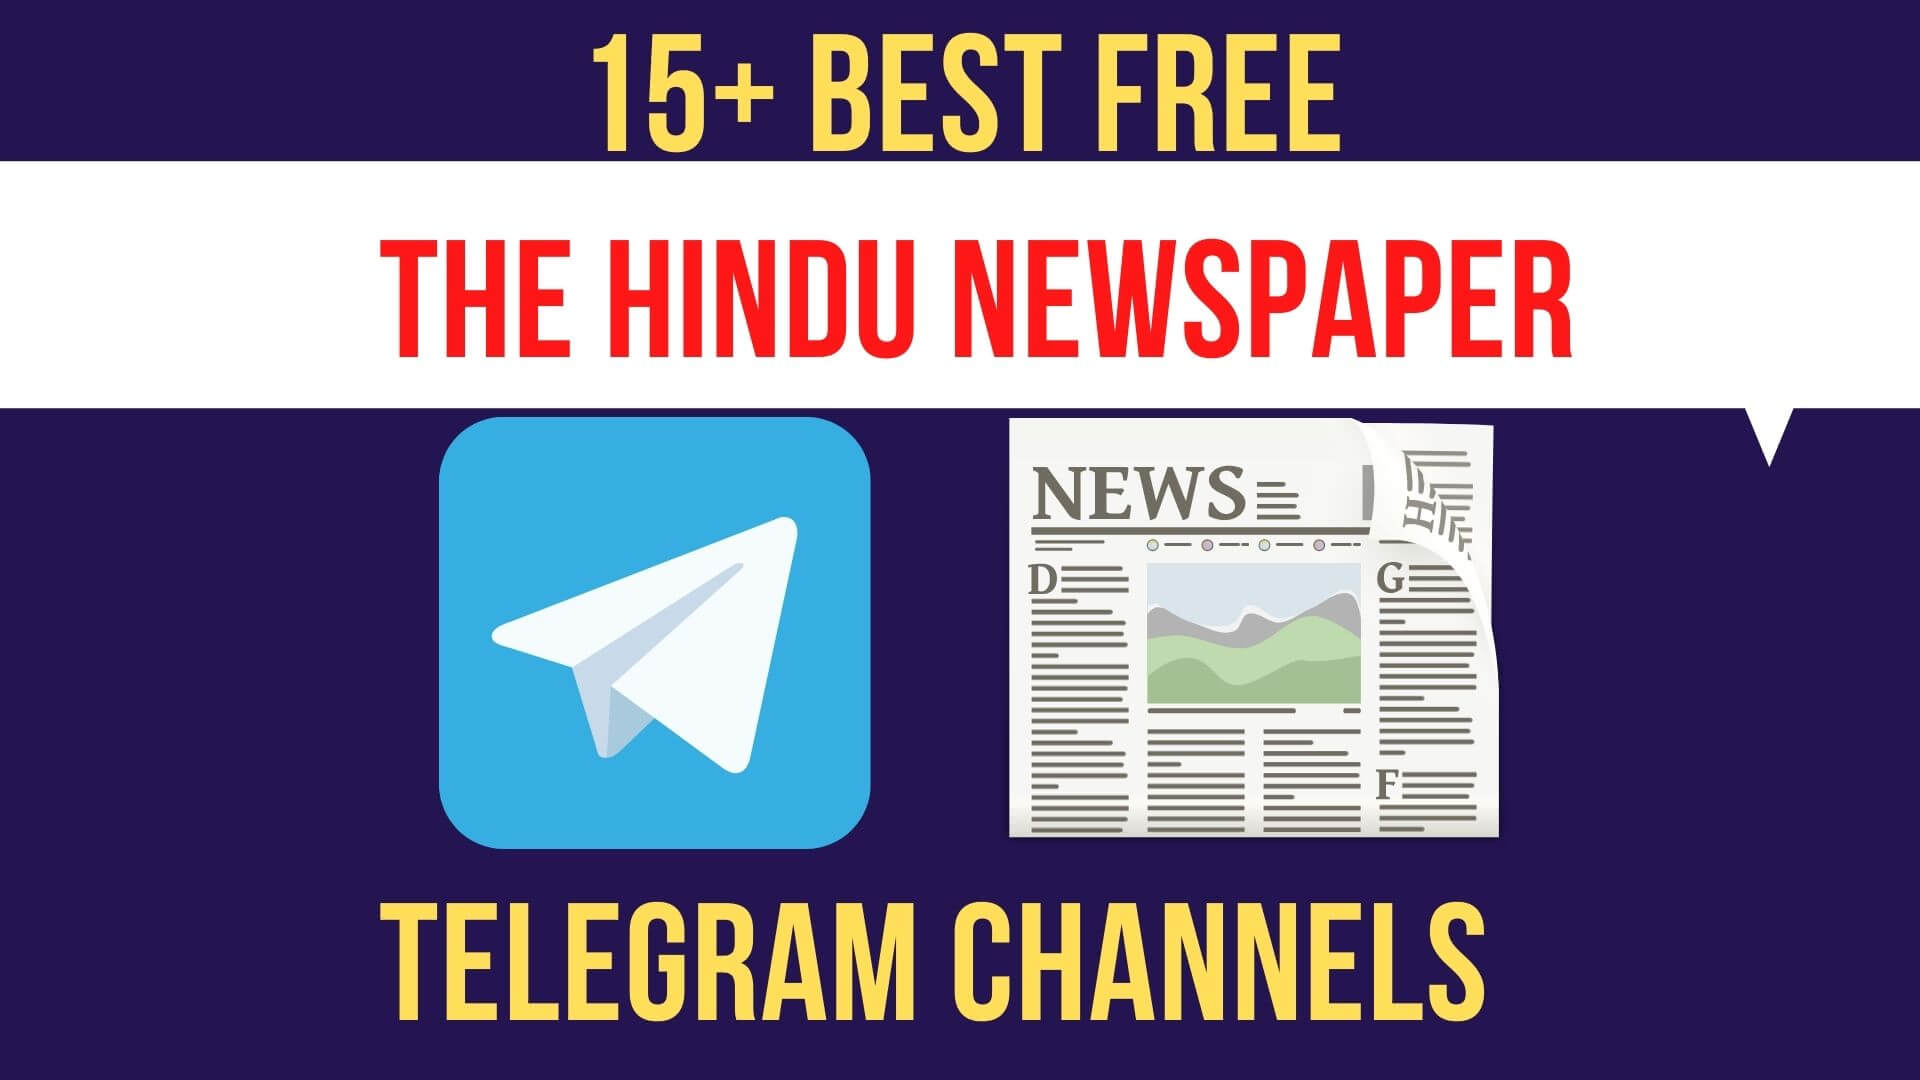 The-Hindu-Newspaper-Telegram-Channels